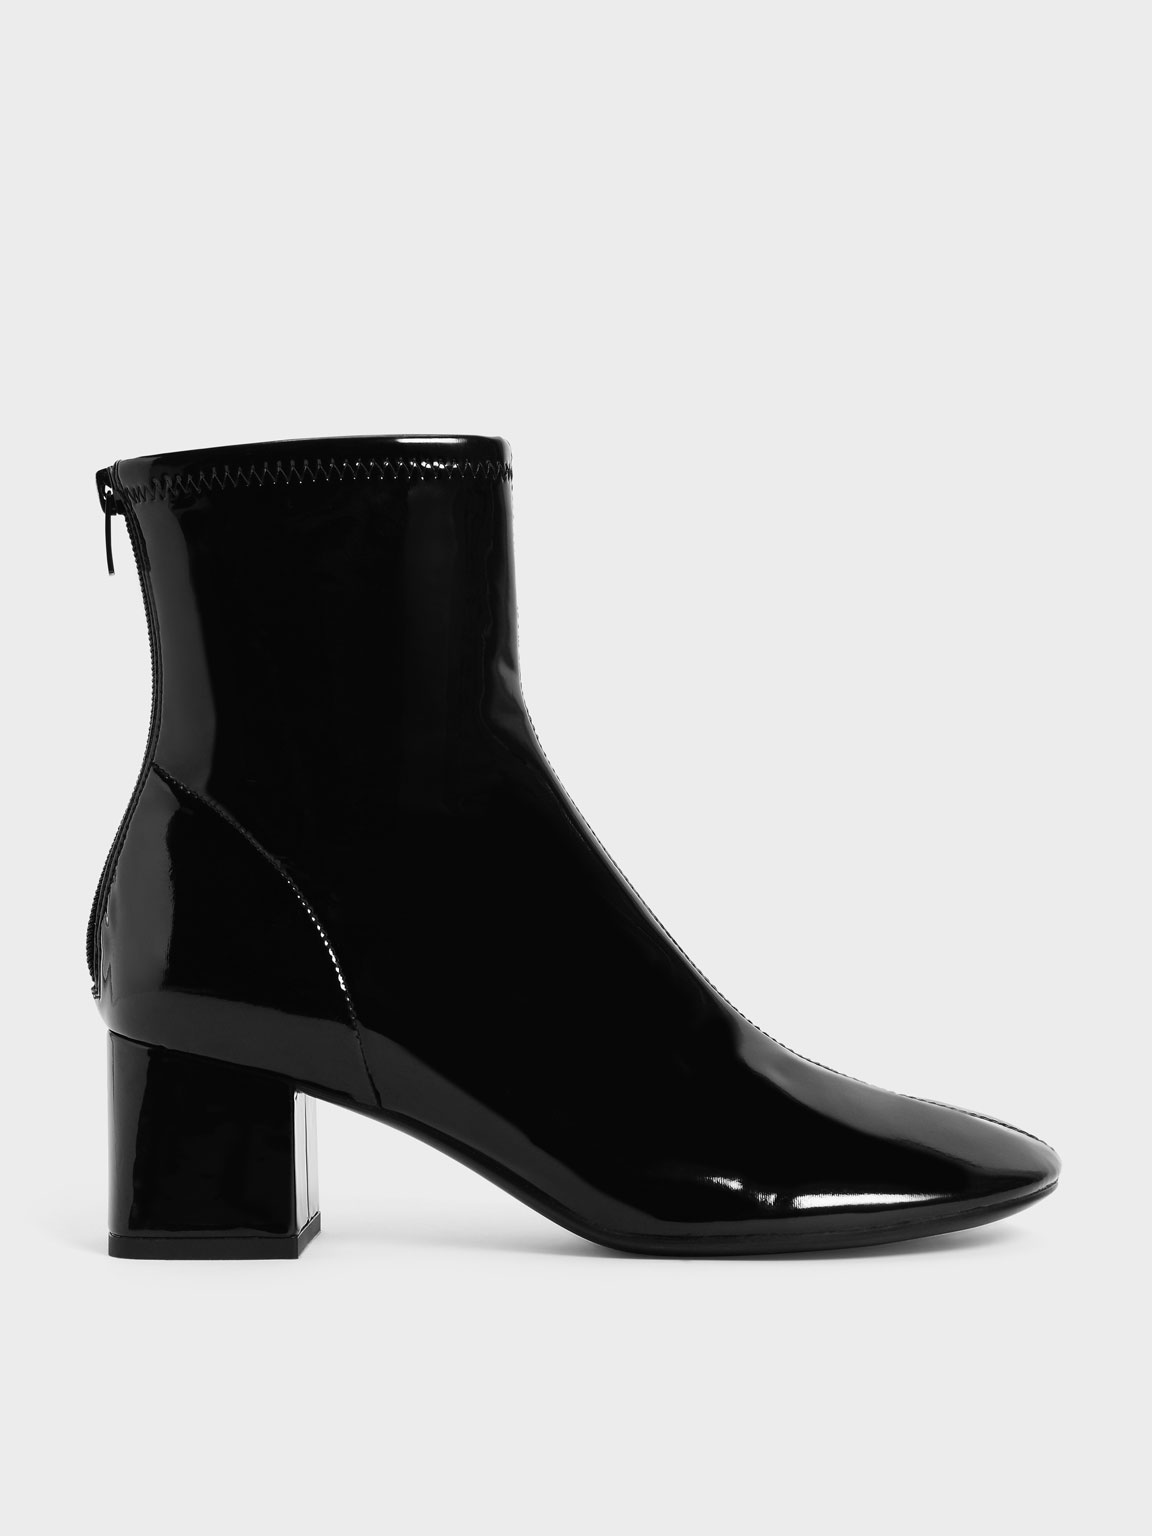 PrettyLittleThing | Shoes | Black Patent Pu Point Toe Slim Mid Heel Knee  High Boots | Poshmark